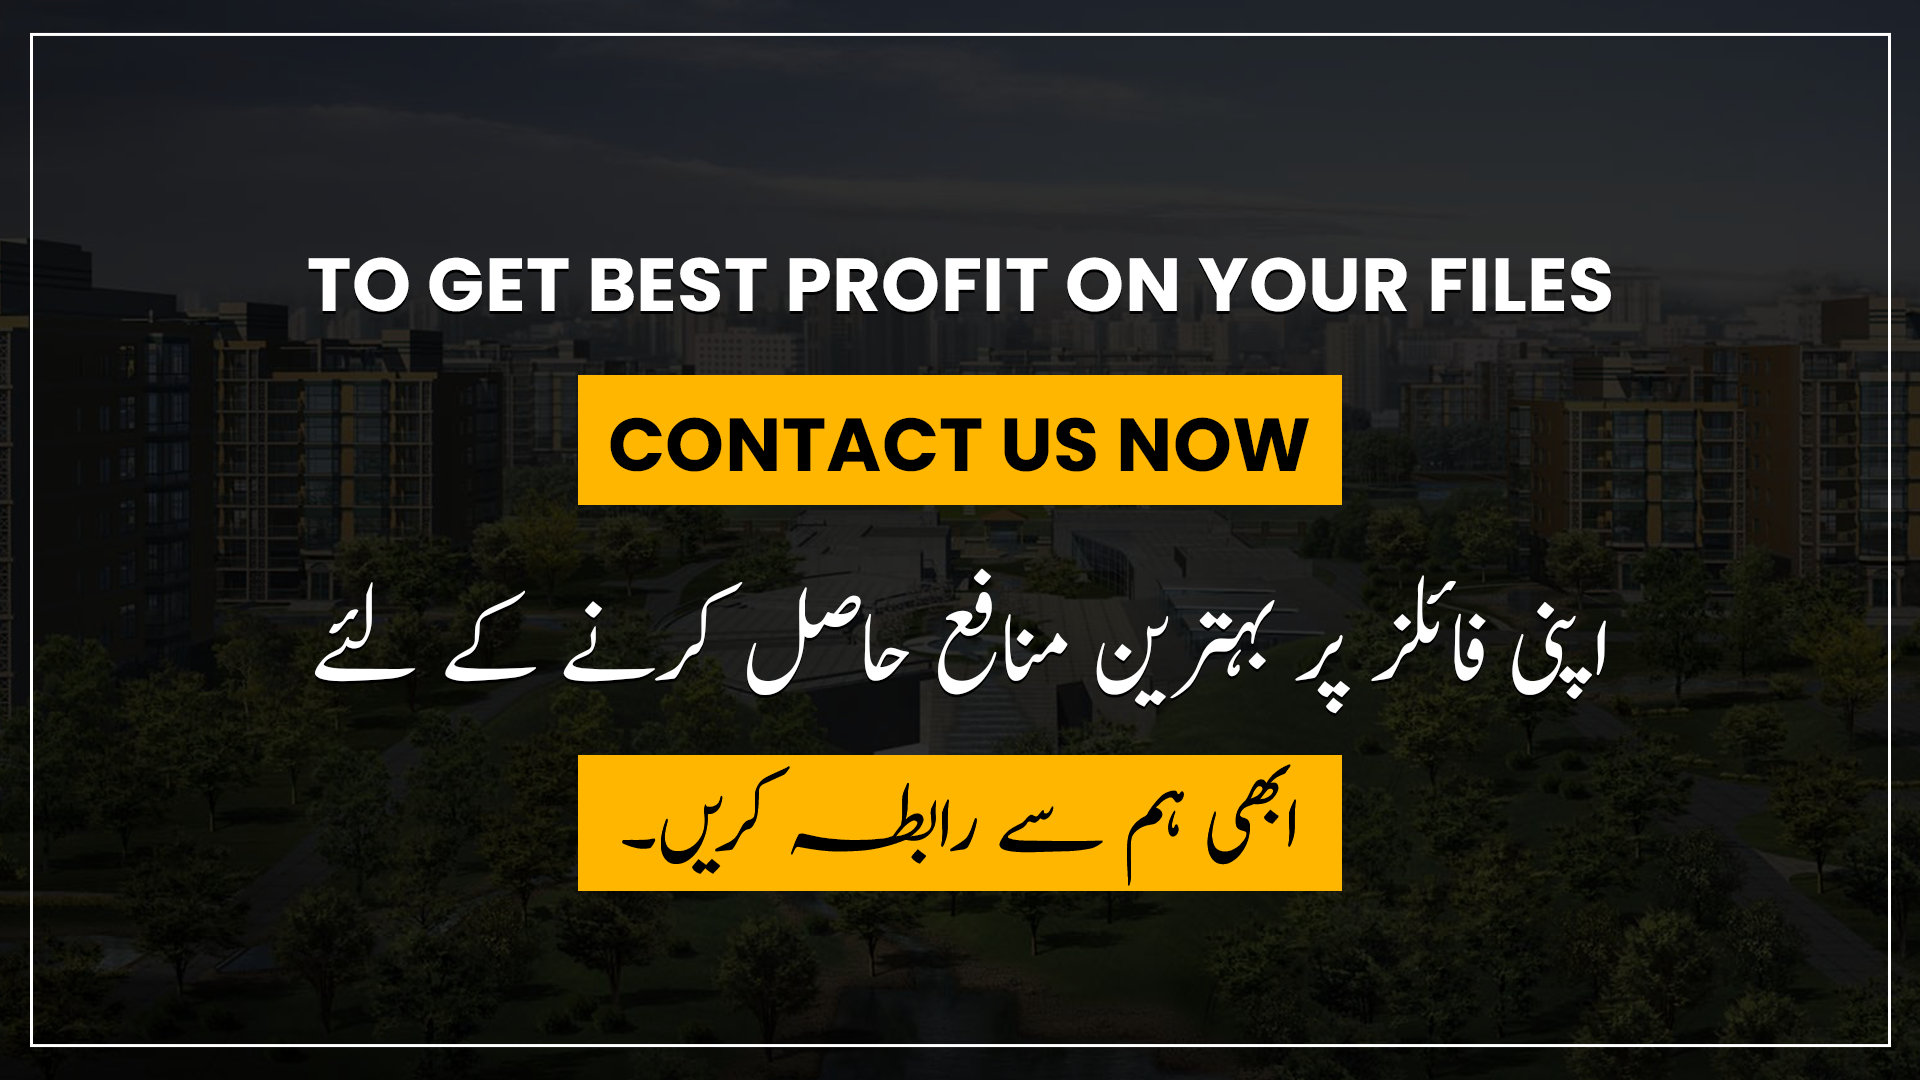 Lahore smart city rates and profit